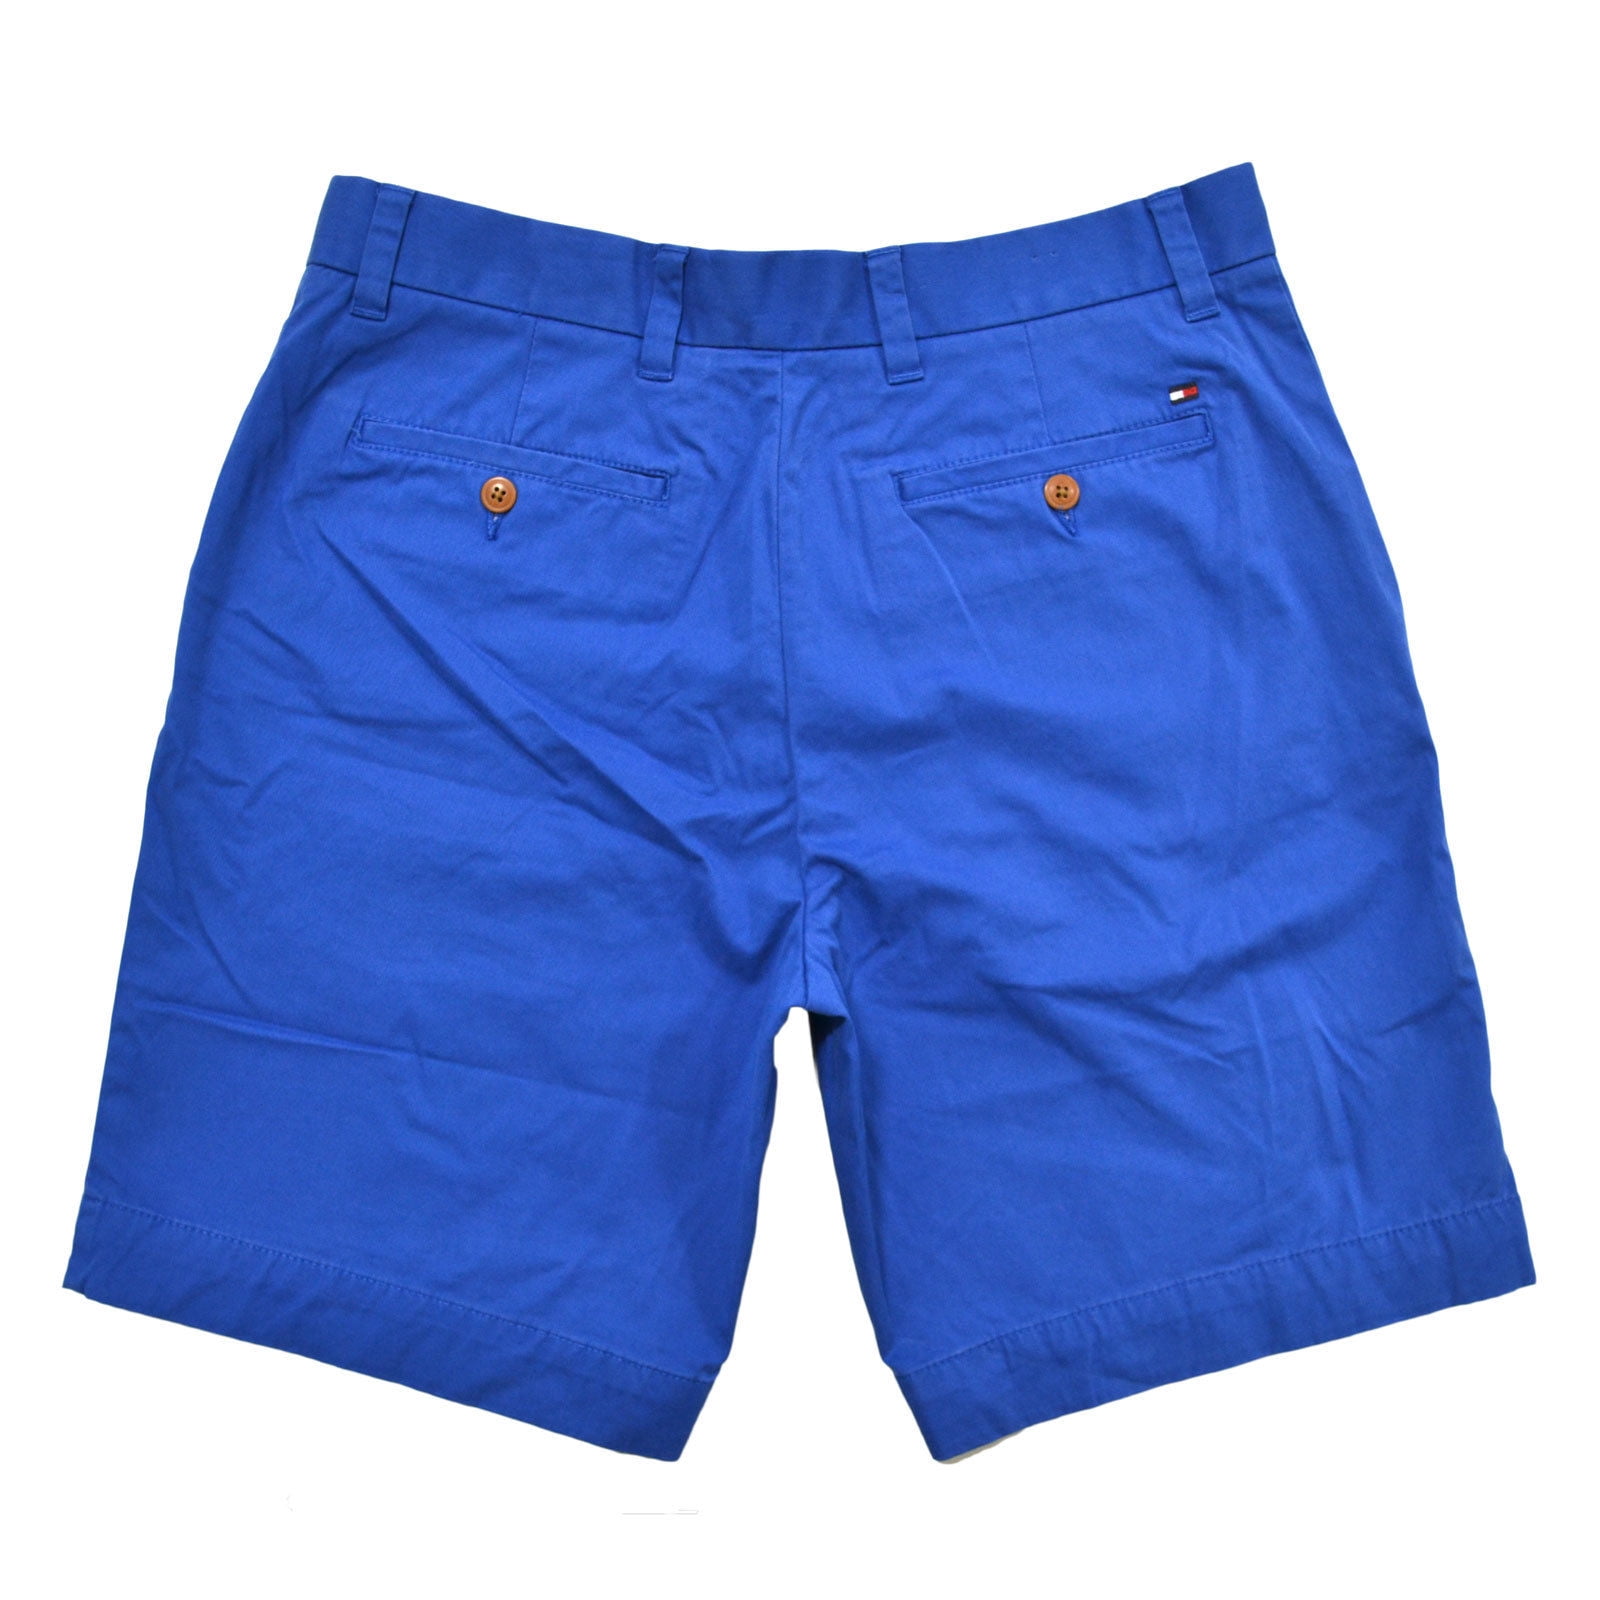 Tommy Hilfiger Mens Flat Front Shorts (30, Sapphire Blue)